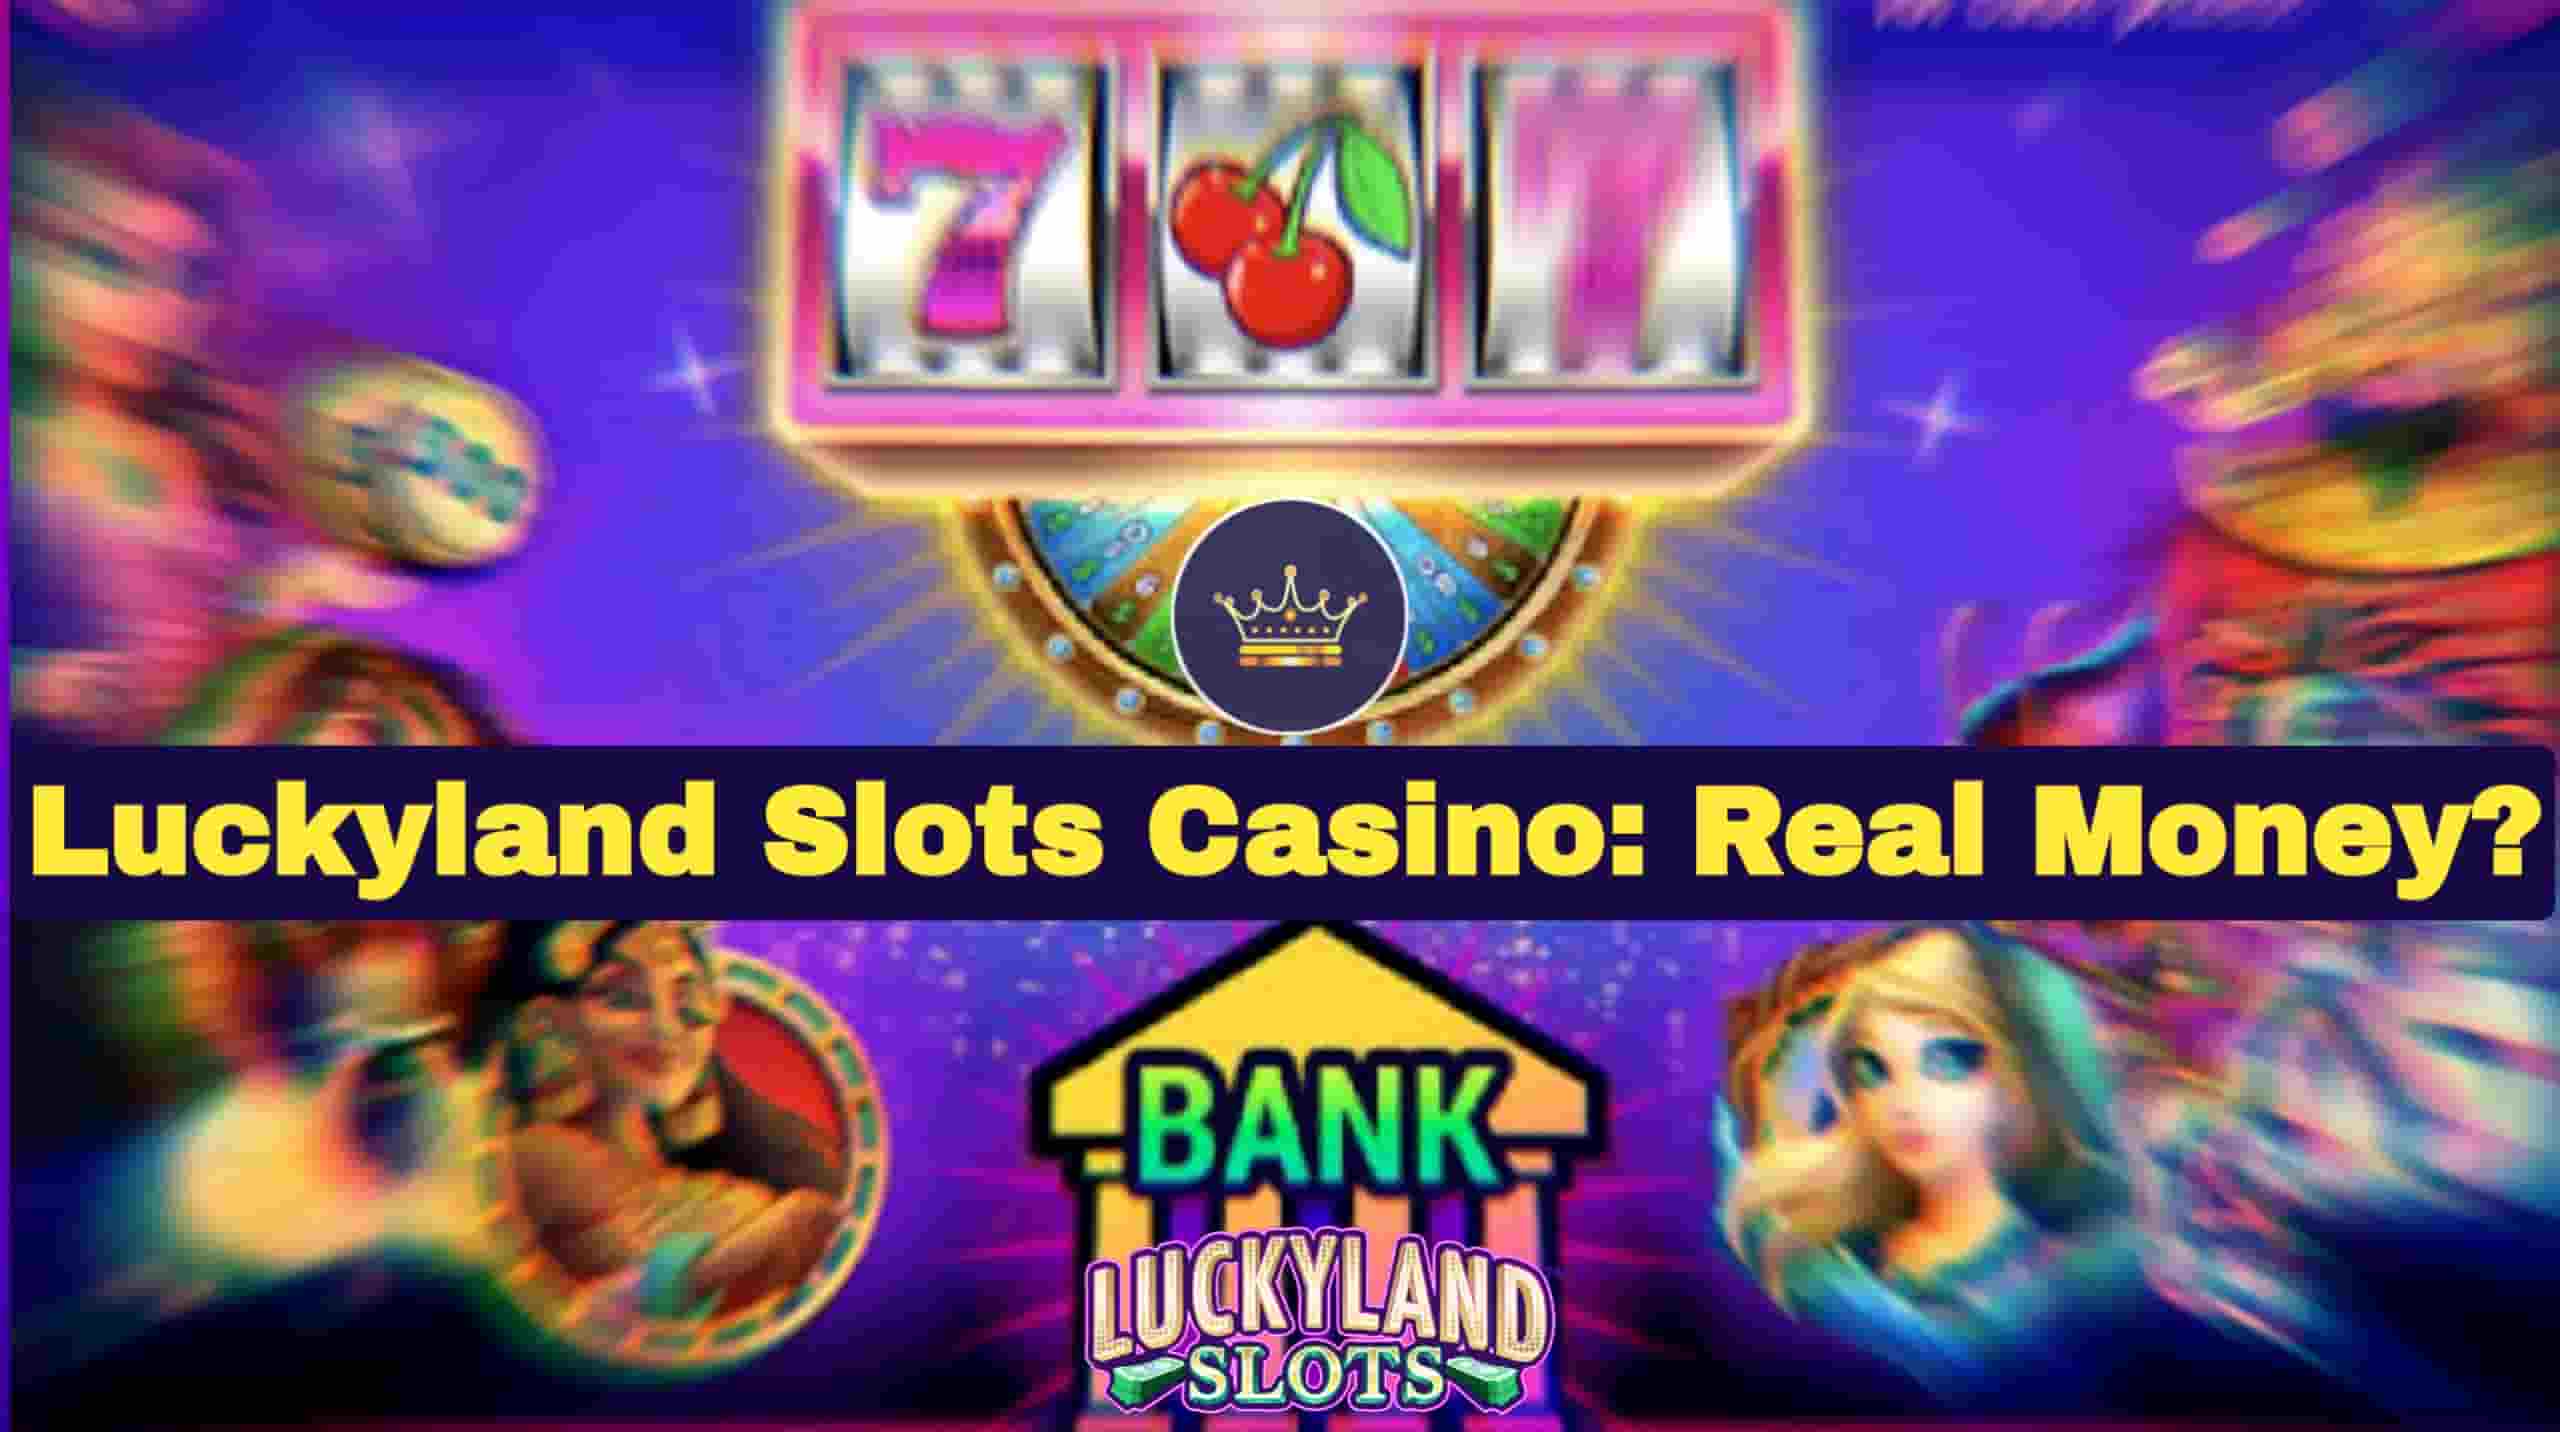 LuckyLand Slots Casino: Real Money